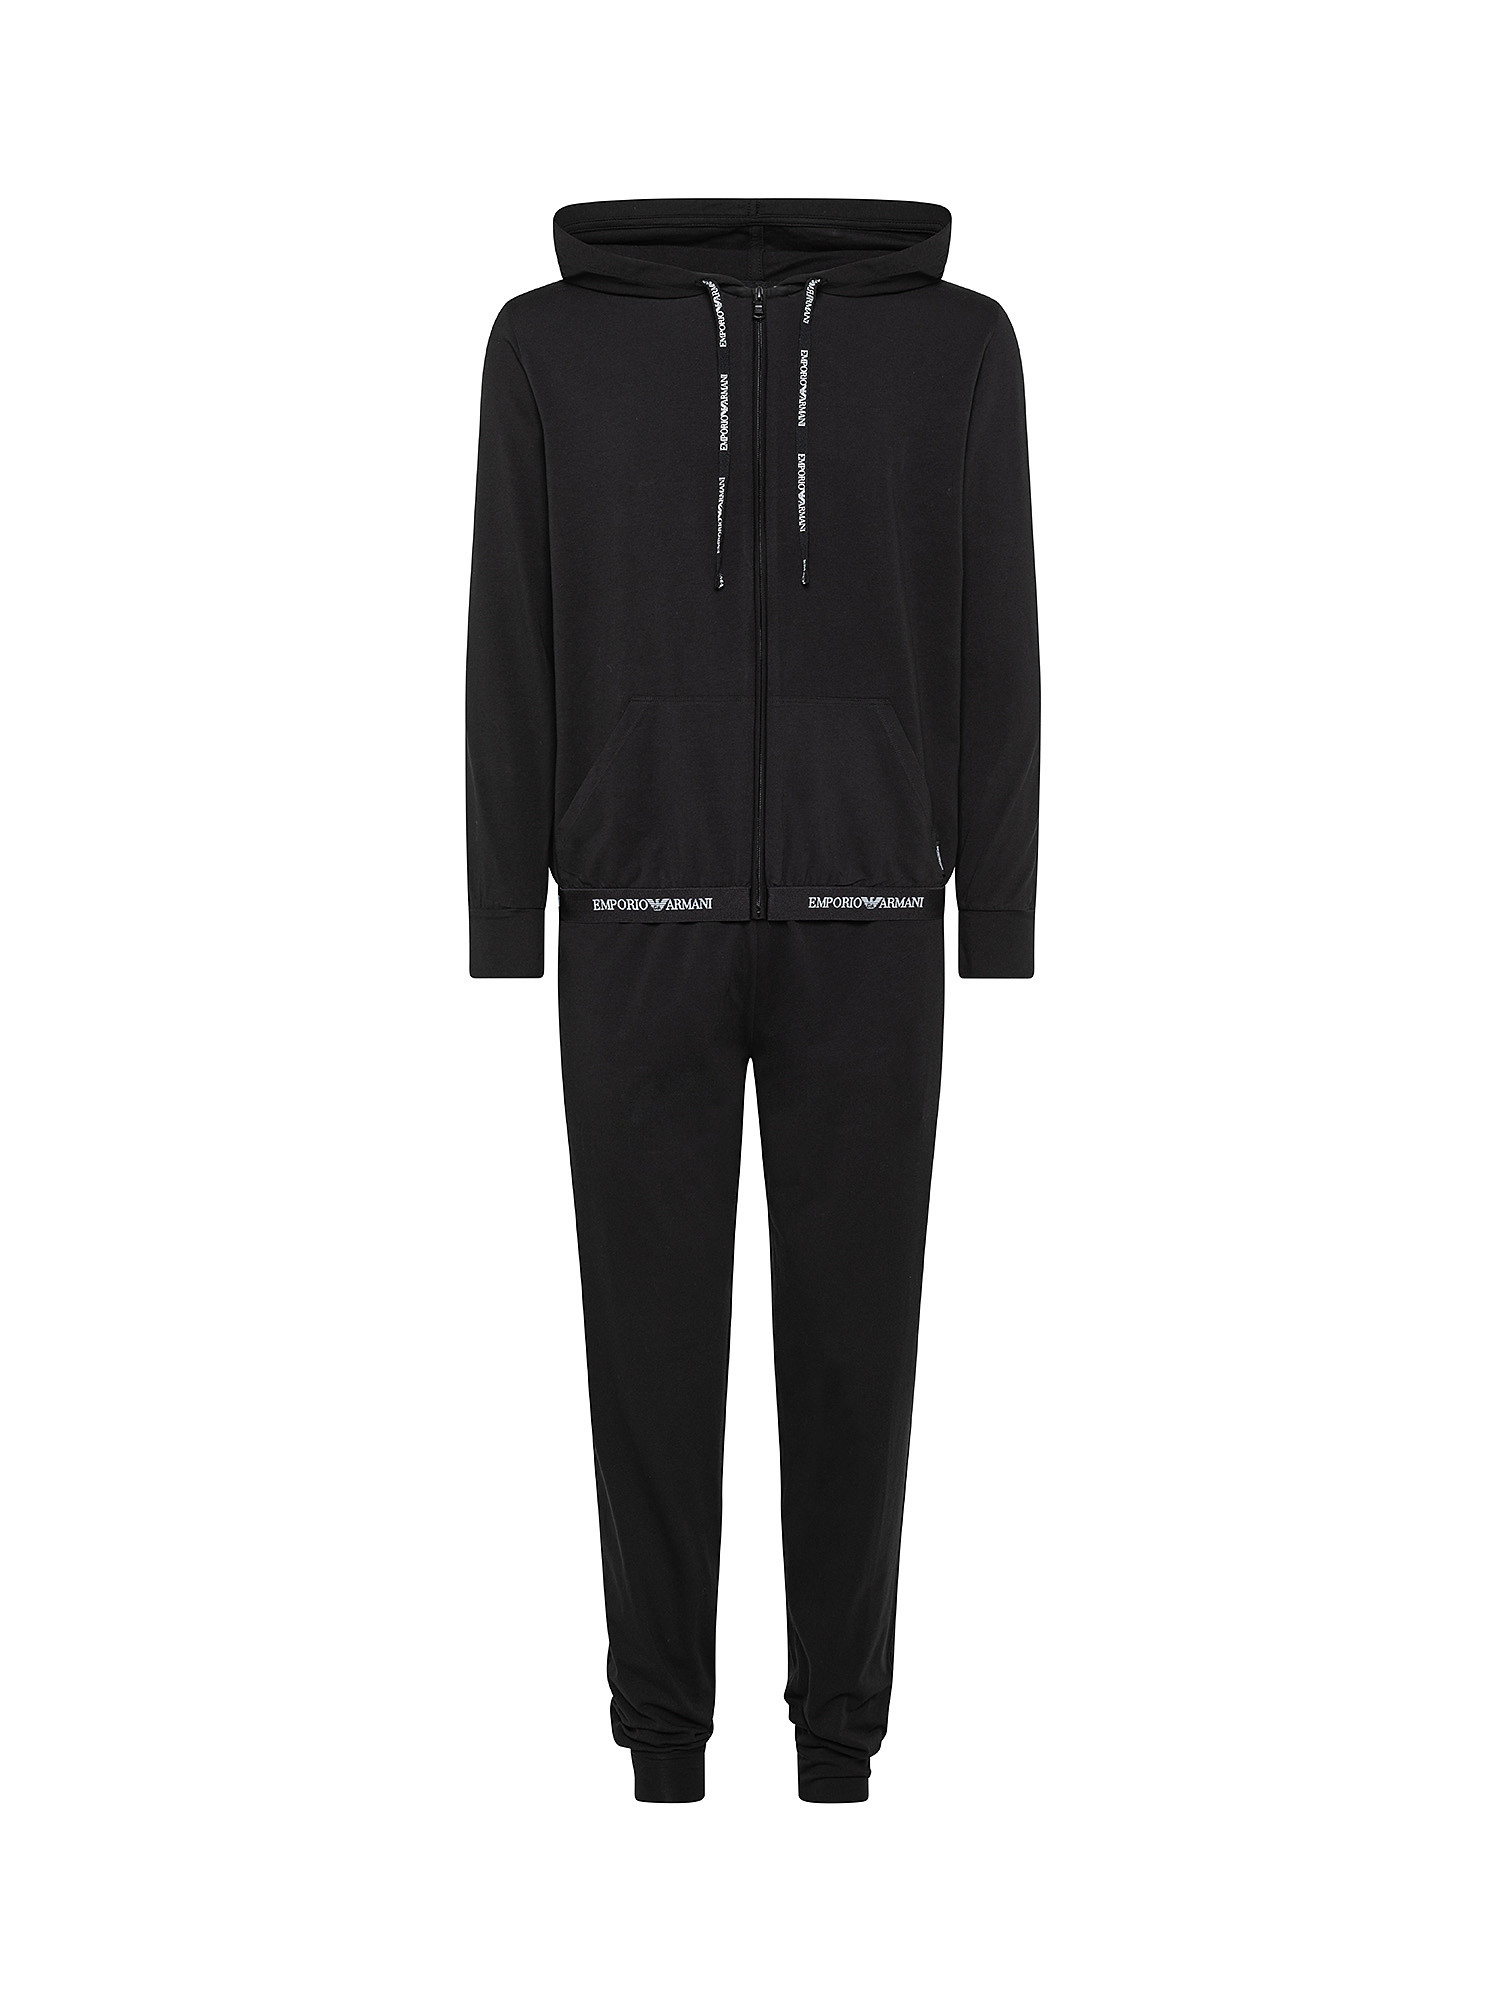 Loungewear set with hooded sweatshirt, Black, large image number 0